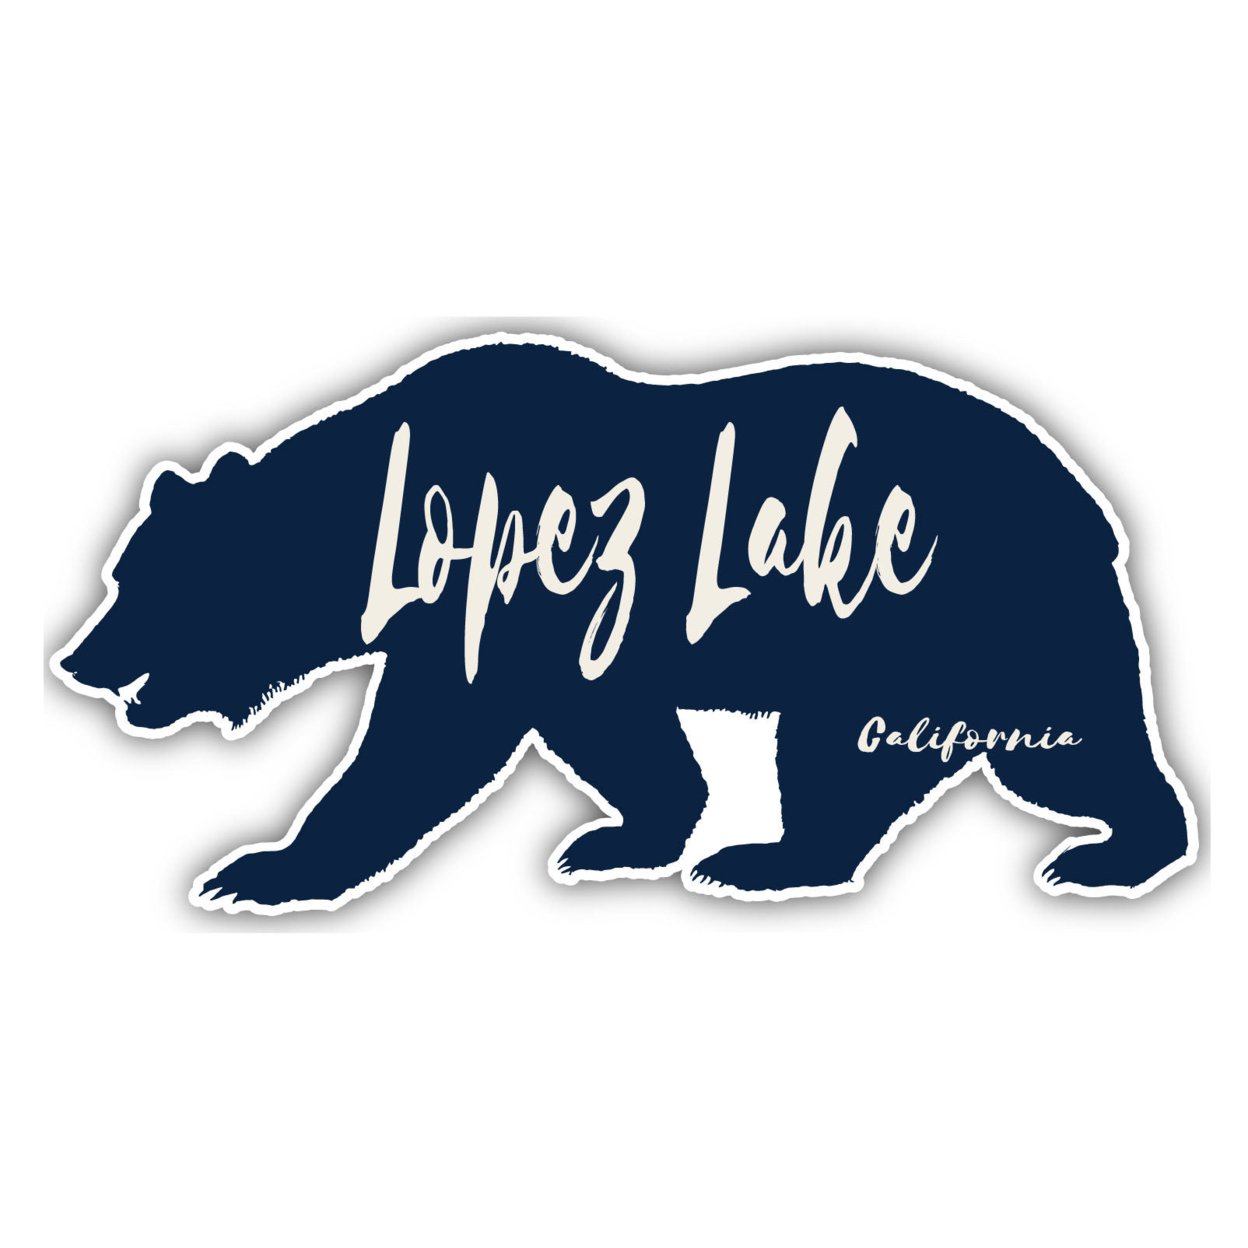 Lopez Lake California Souvenir Decorative Stickers (Choose Theme And Size) - 4-Inch, Tent